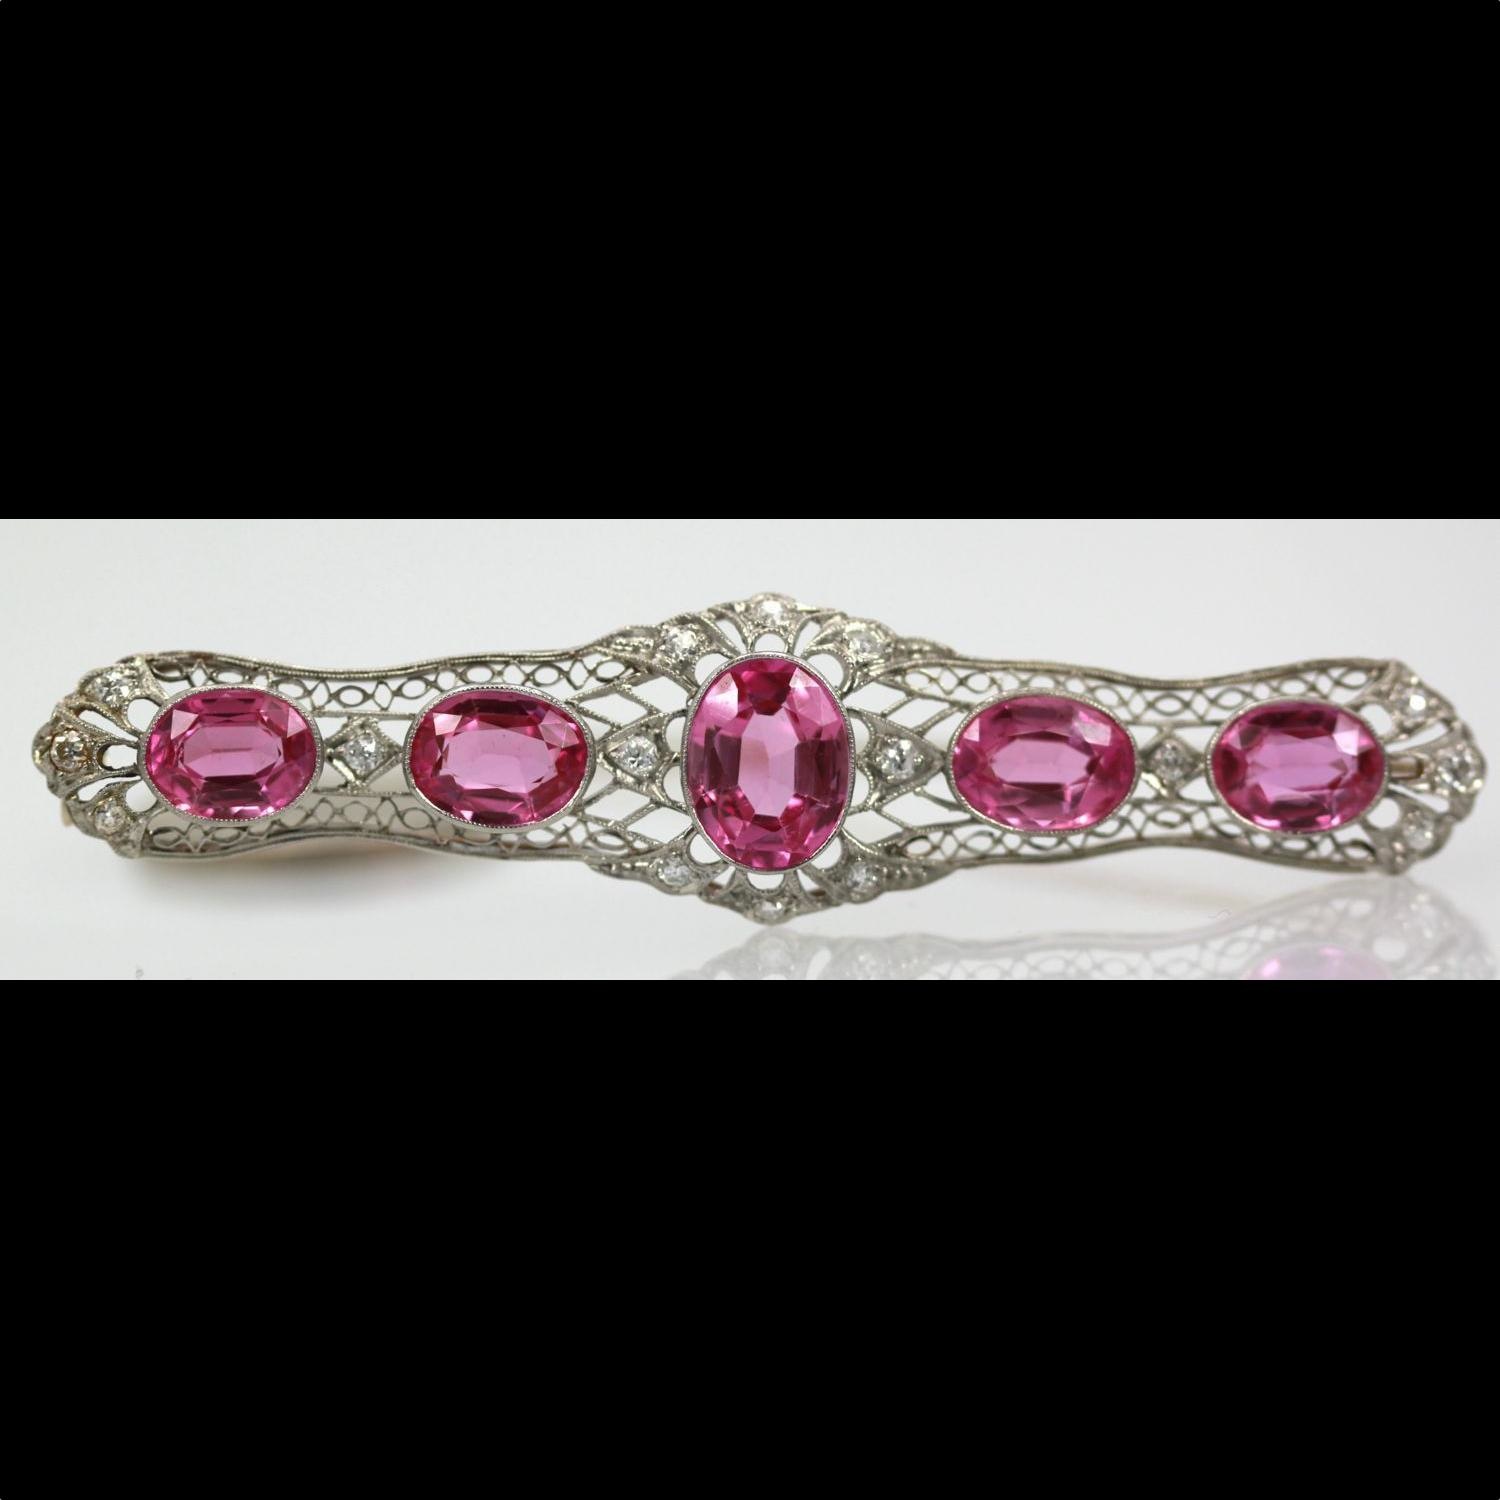 Beautiful 18K White Gold Pink Sapphire and Diamond Necklace